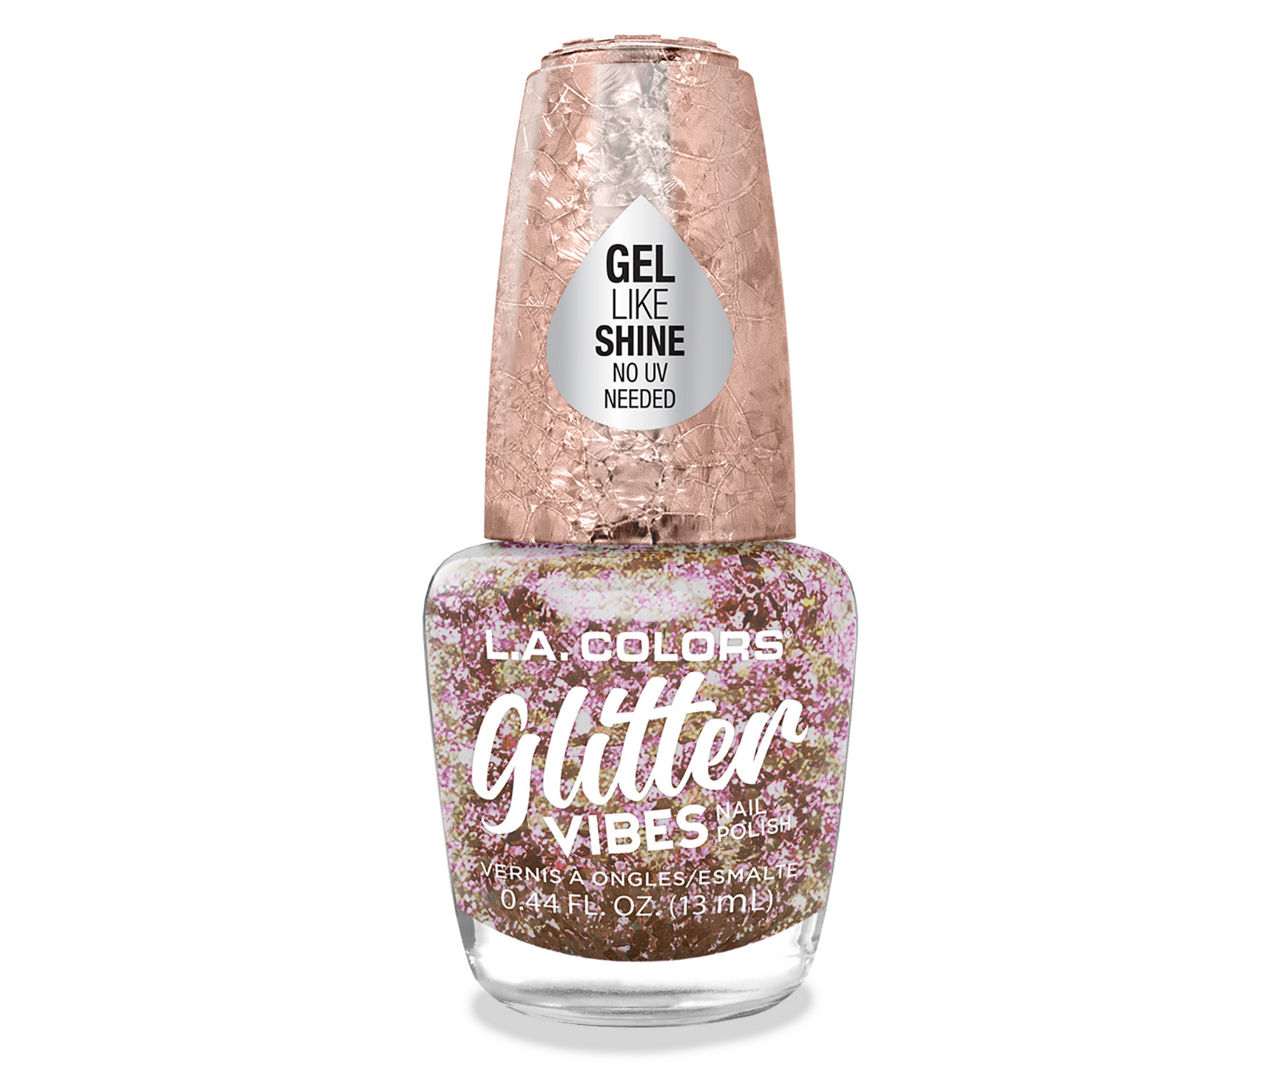 Glitter Vibes Nail Polish in Pure Blush, 0.44 Oz.